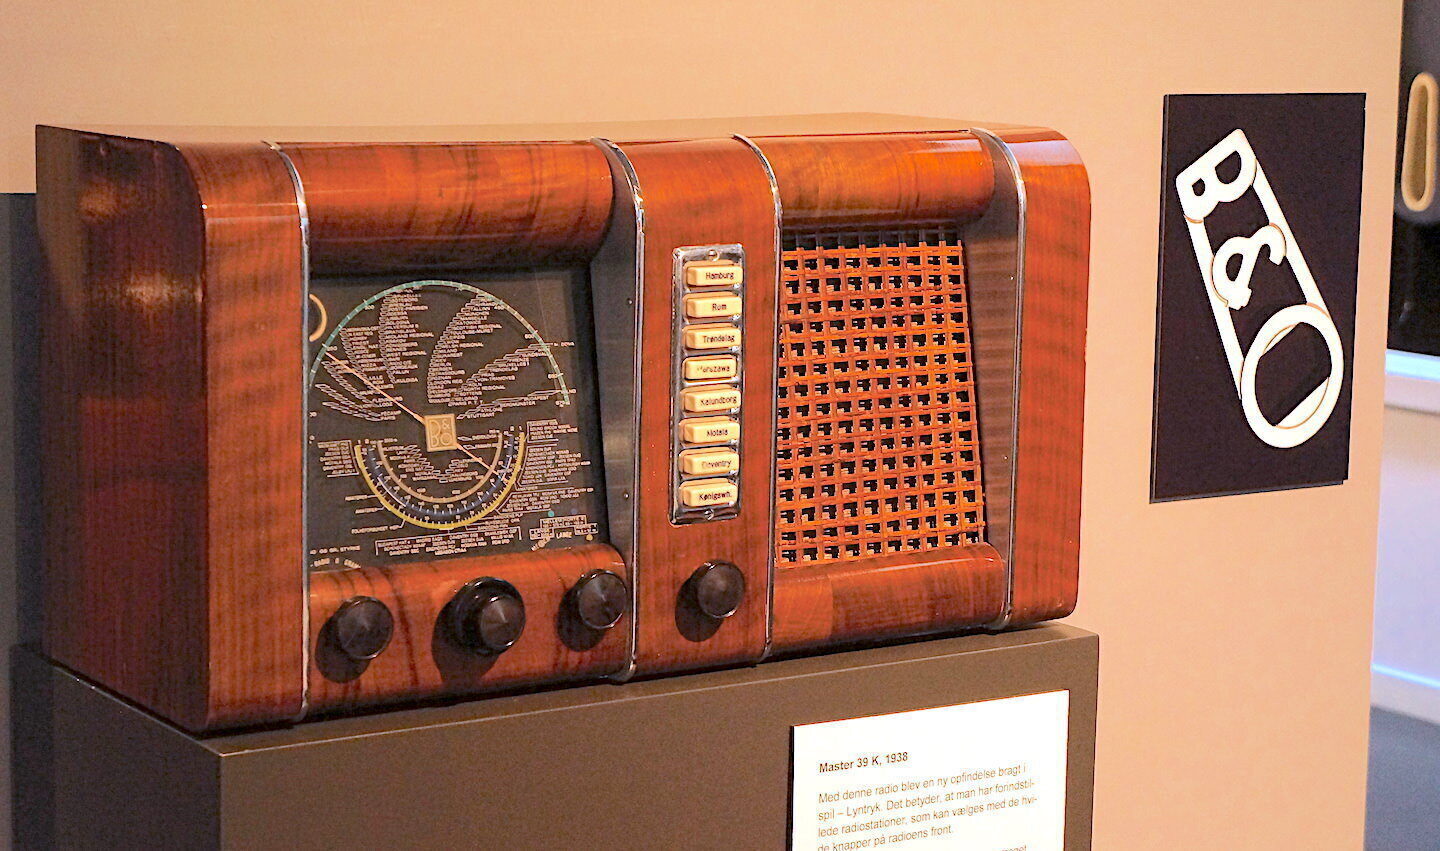 Музей Bang & Olufsen: радио, радиограммофон, радиола, магнитофон, кассетник, утюг